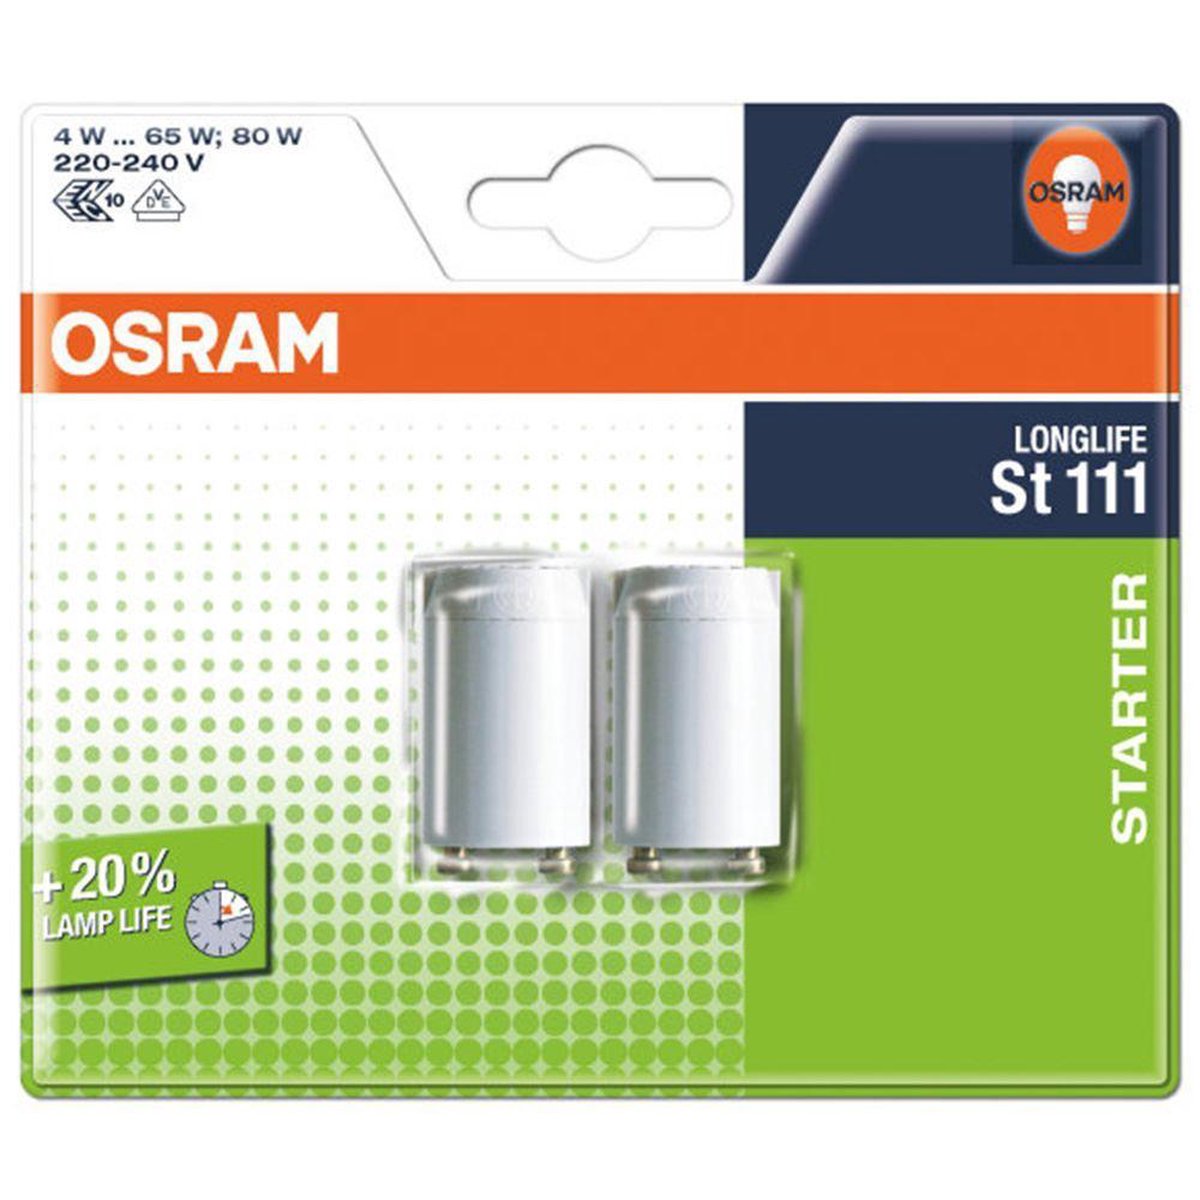 Osram Starter ST111 4-80W